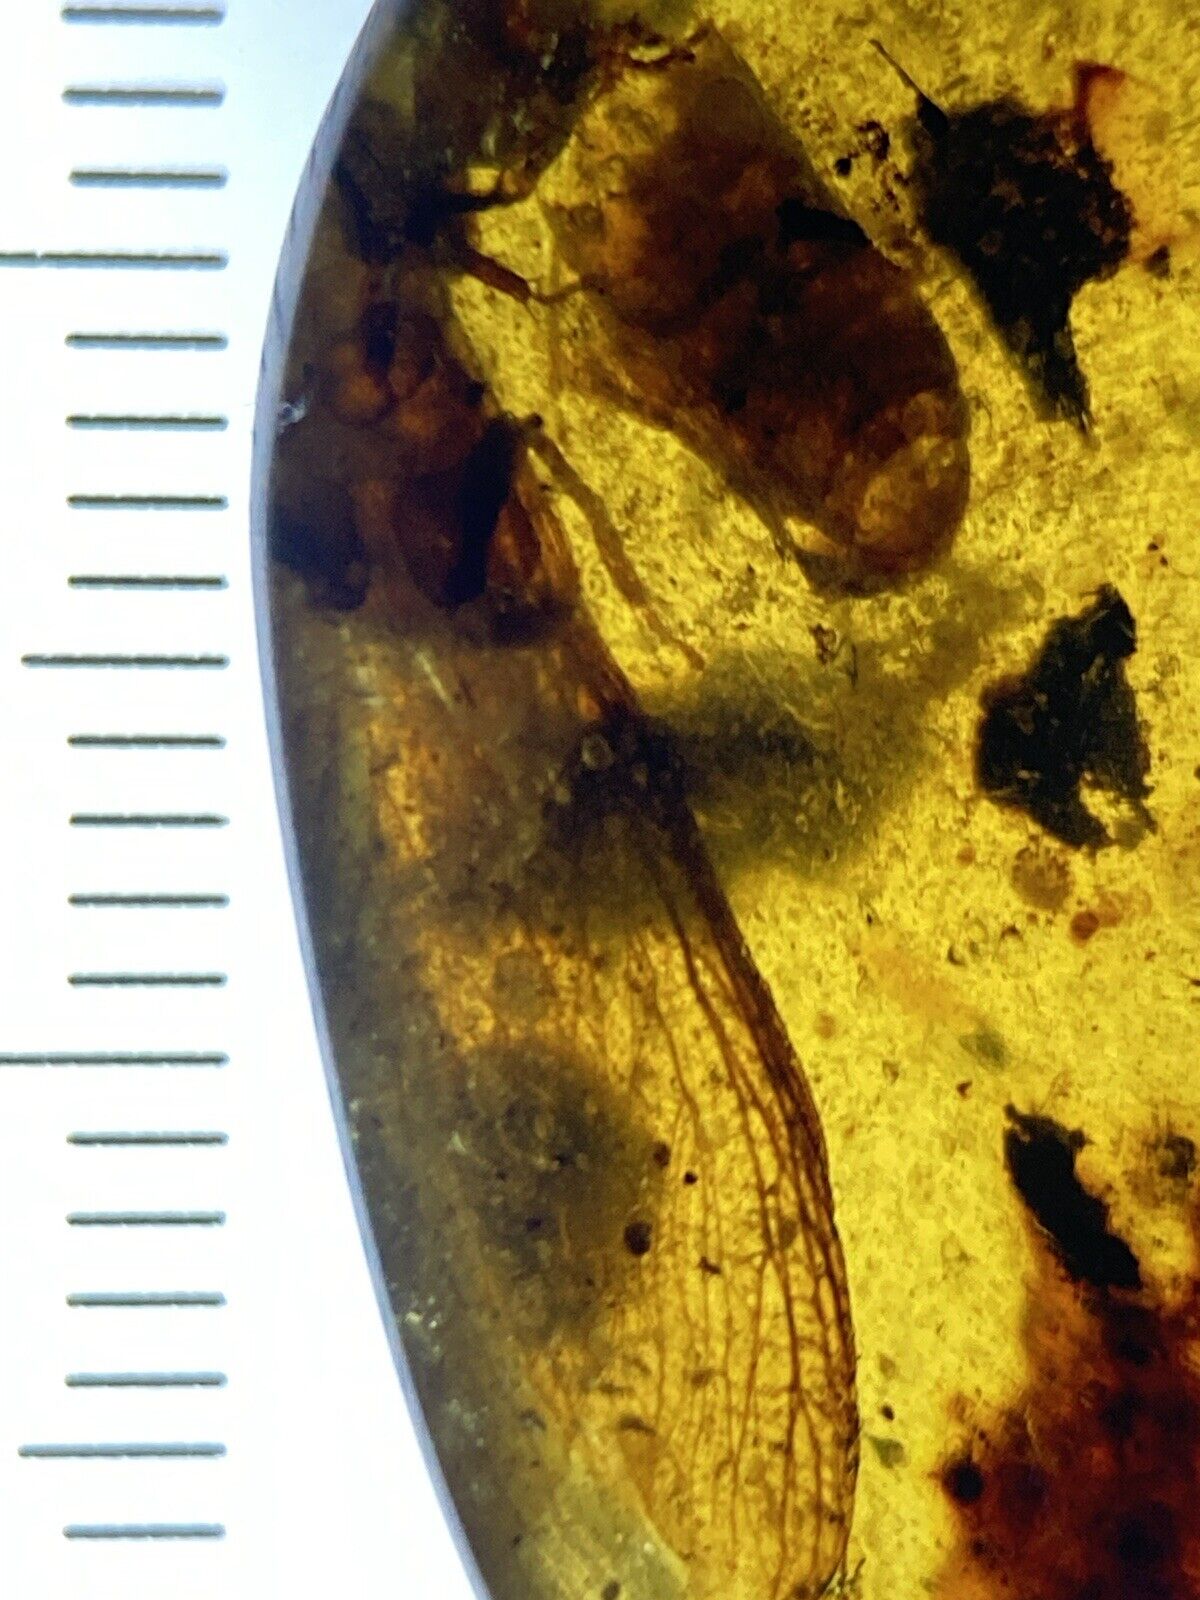 Huge Winged Insect (termite?), Fossil Inclusion in Genuine Burmite Amber, 98MYO